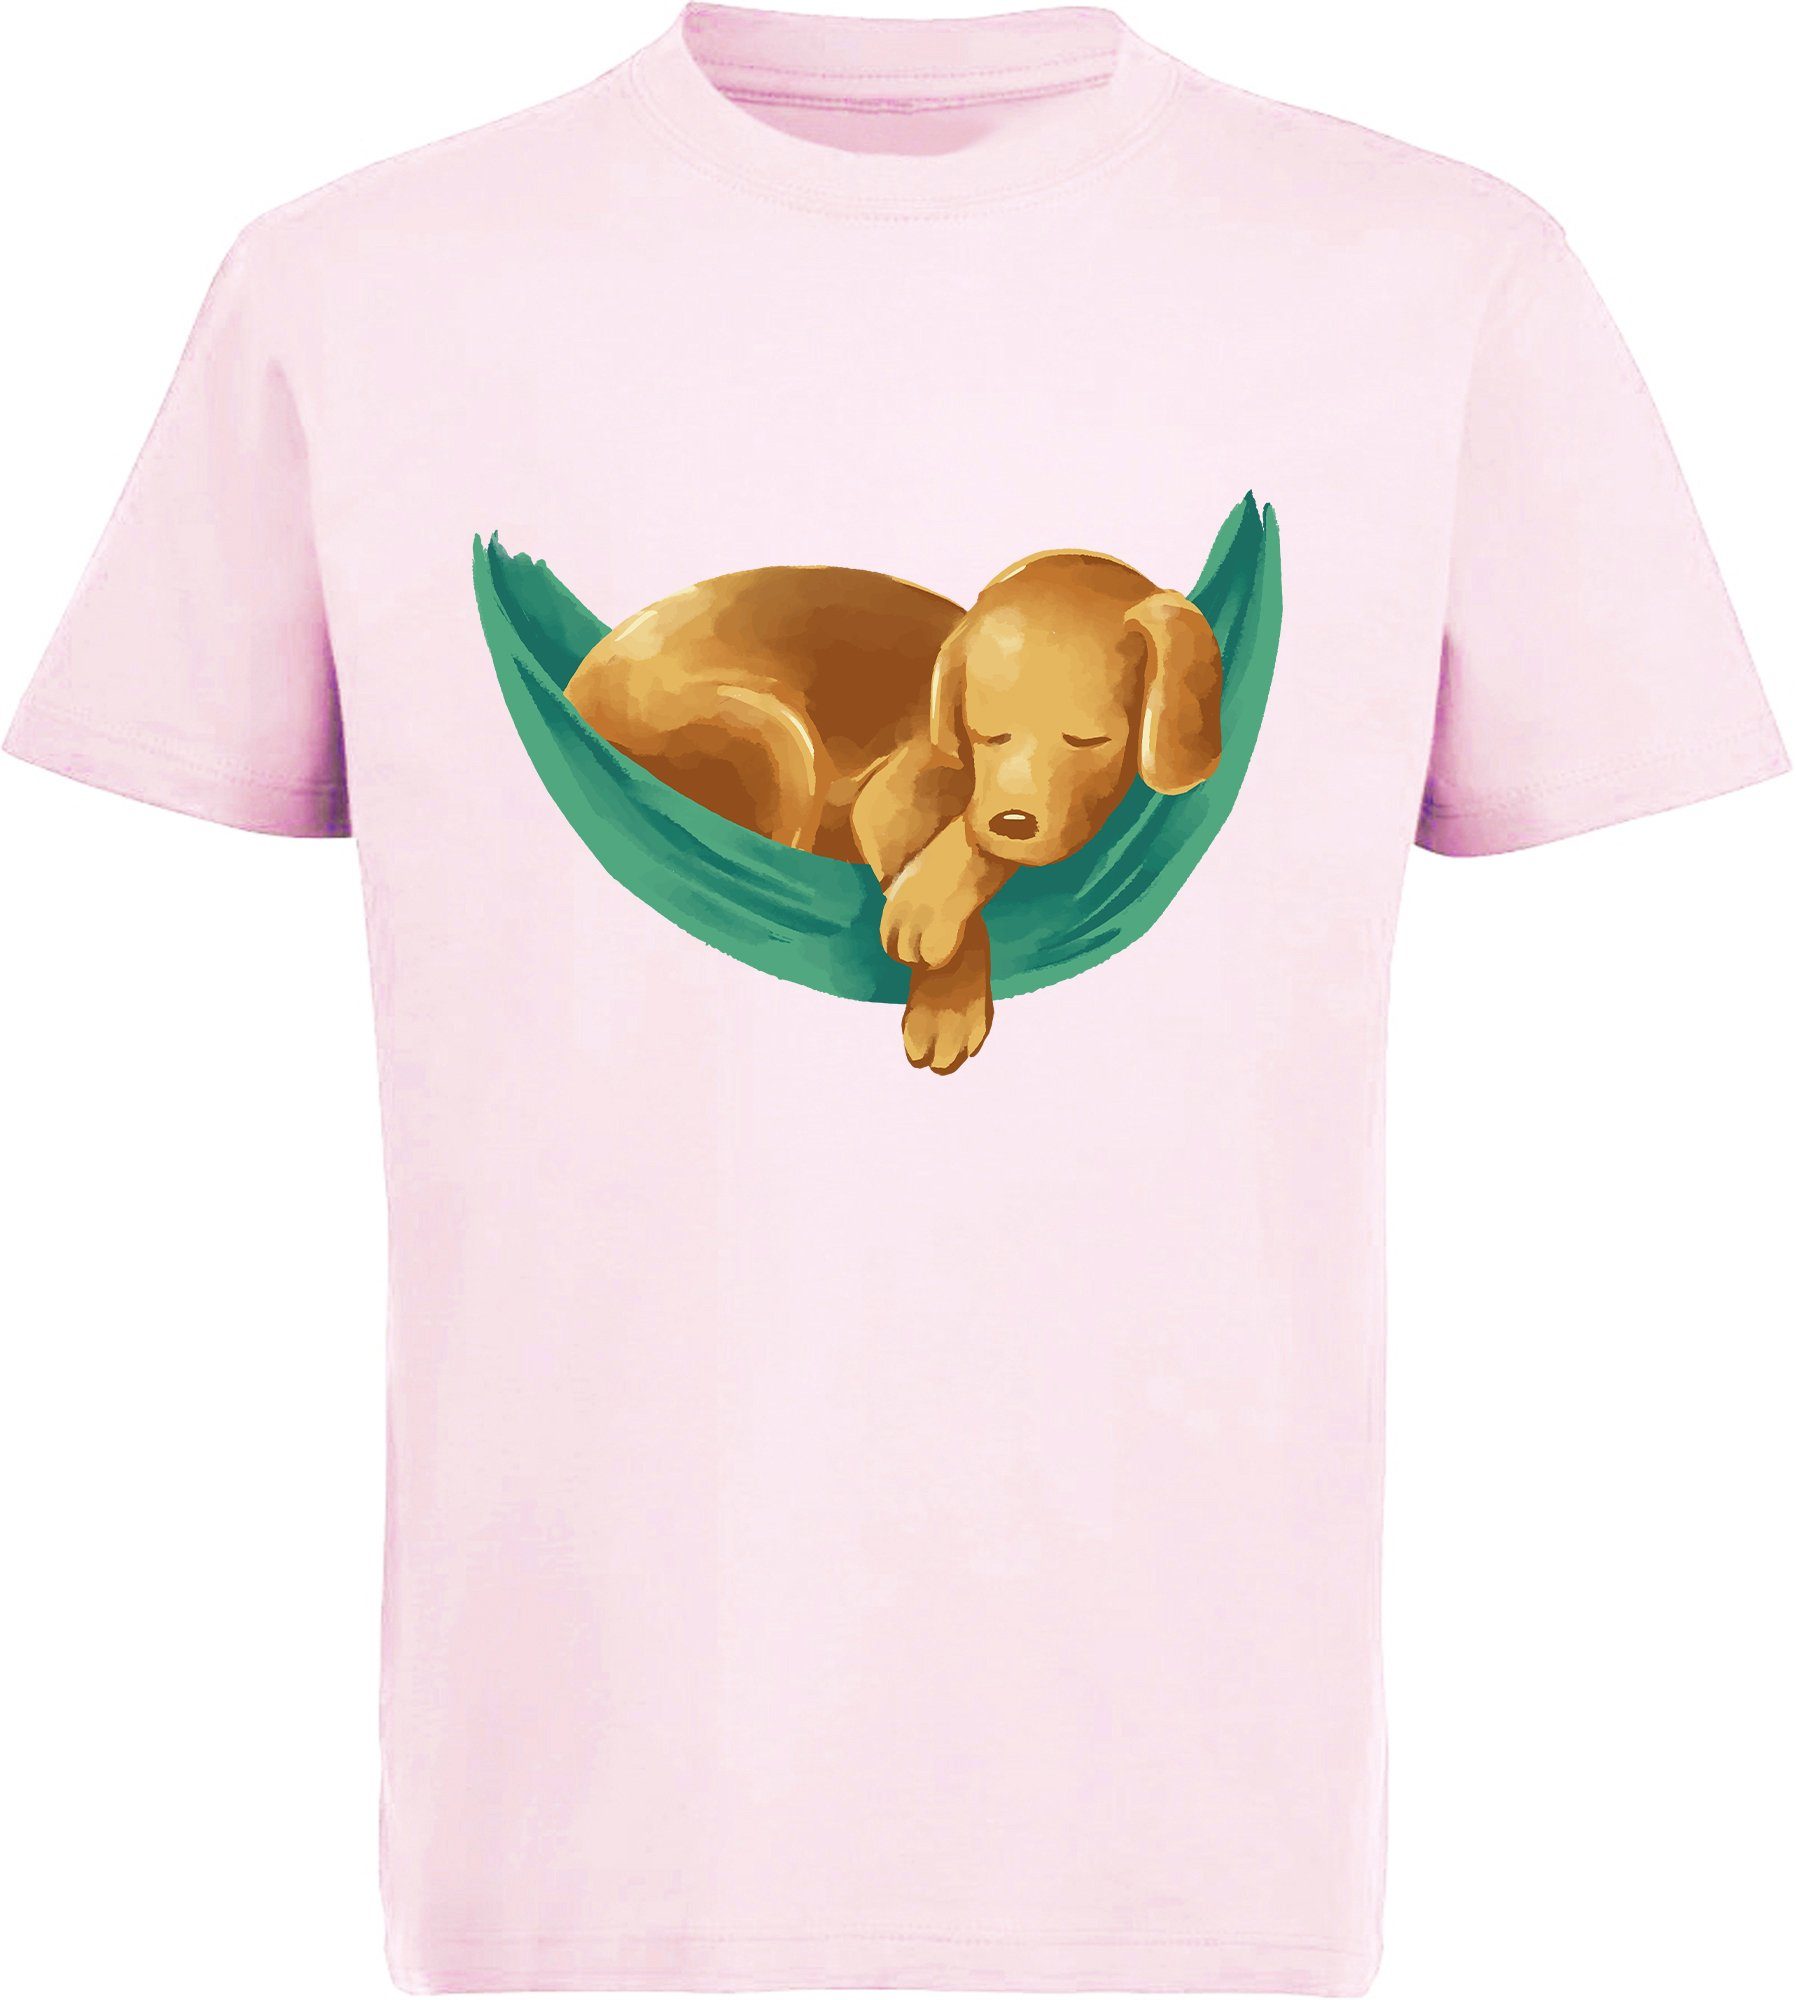 MyDesign24 T-Shirt Kinder Hunde Print Shirt bedruckt - Labrador Welpe in Hängematte Baumwollshirt mit Aufdruck, i245 rosa